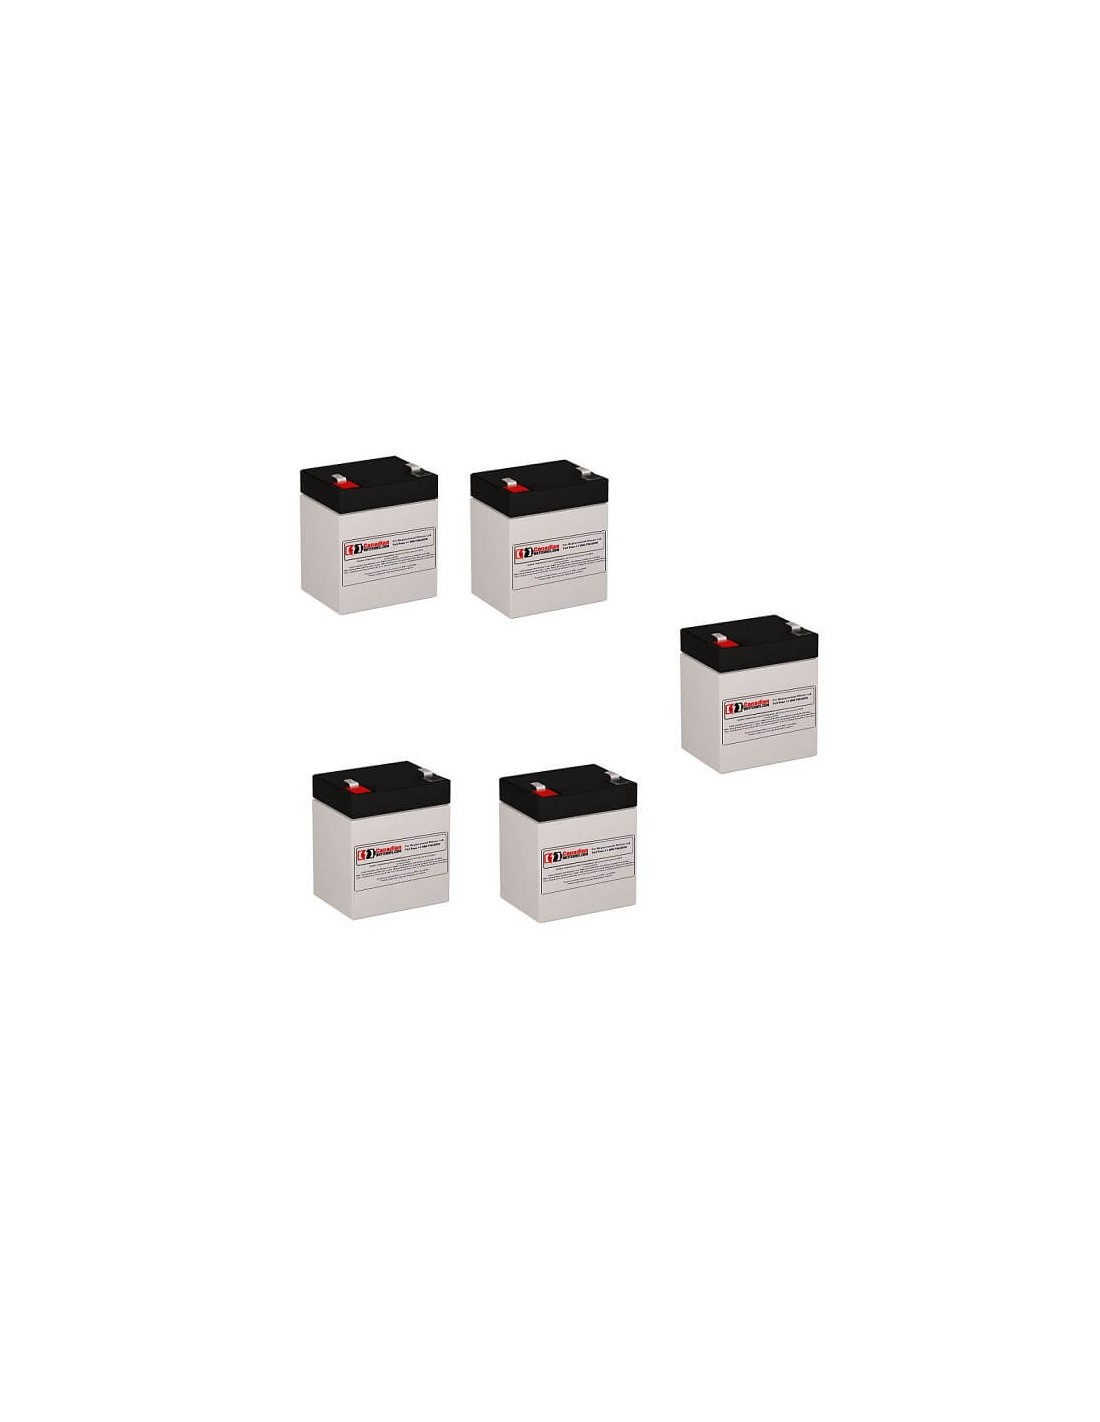 Batteries for Mitsubishi 7011a-10 Mitsubishi UPS, 5 x 12V, 5Ah - 60Wh